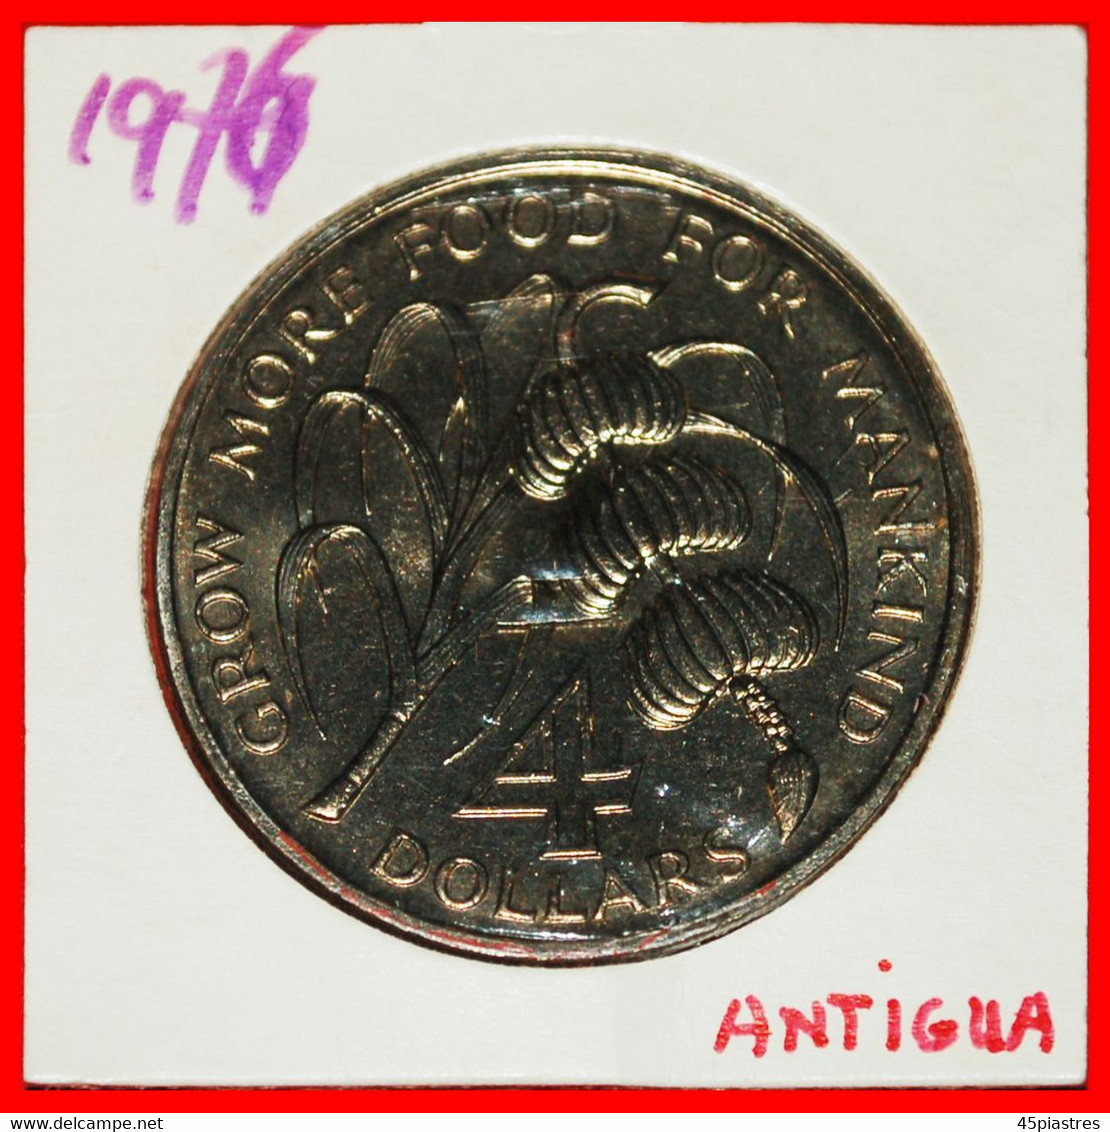 * GREAT BRITAIN FAO: ANTIGUA AND BARBUDA ★ 4 DOLLARS 1970 PROOF! RARE! ★LOW START ★ NO RESERVE! - Antigua Et Barbuda